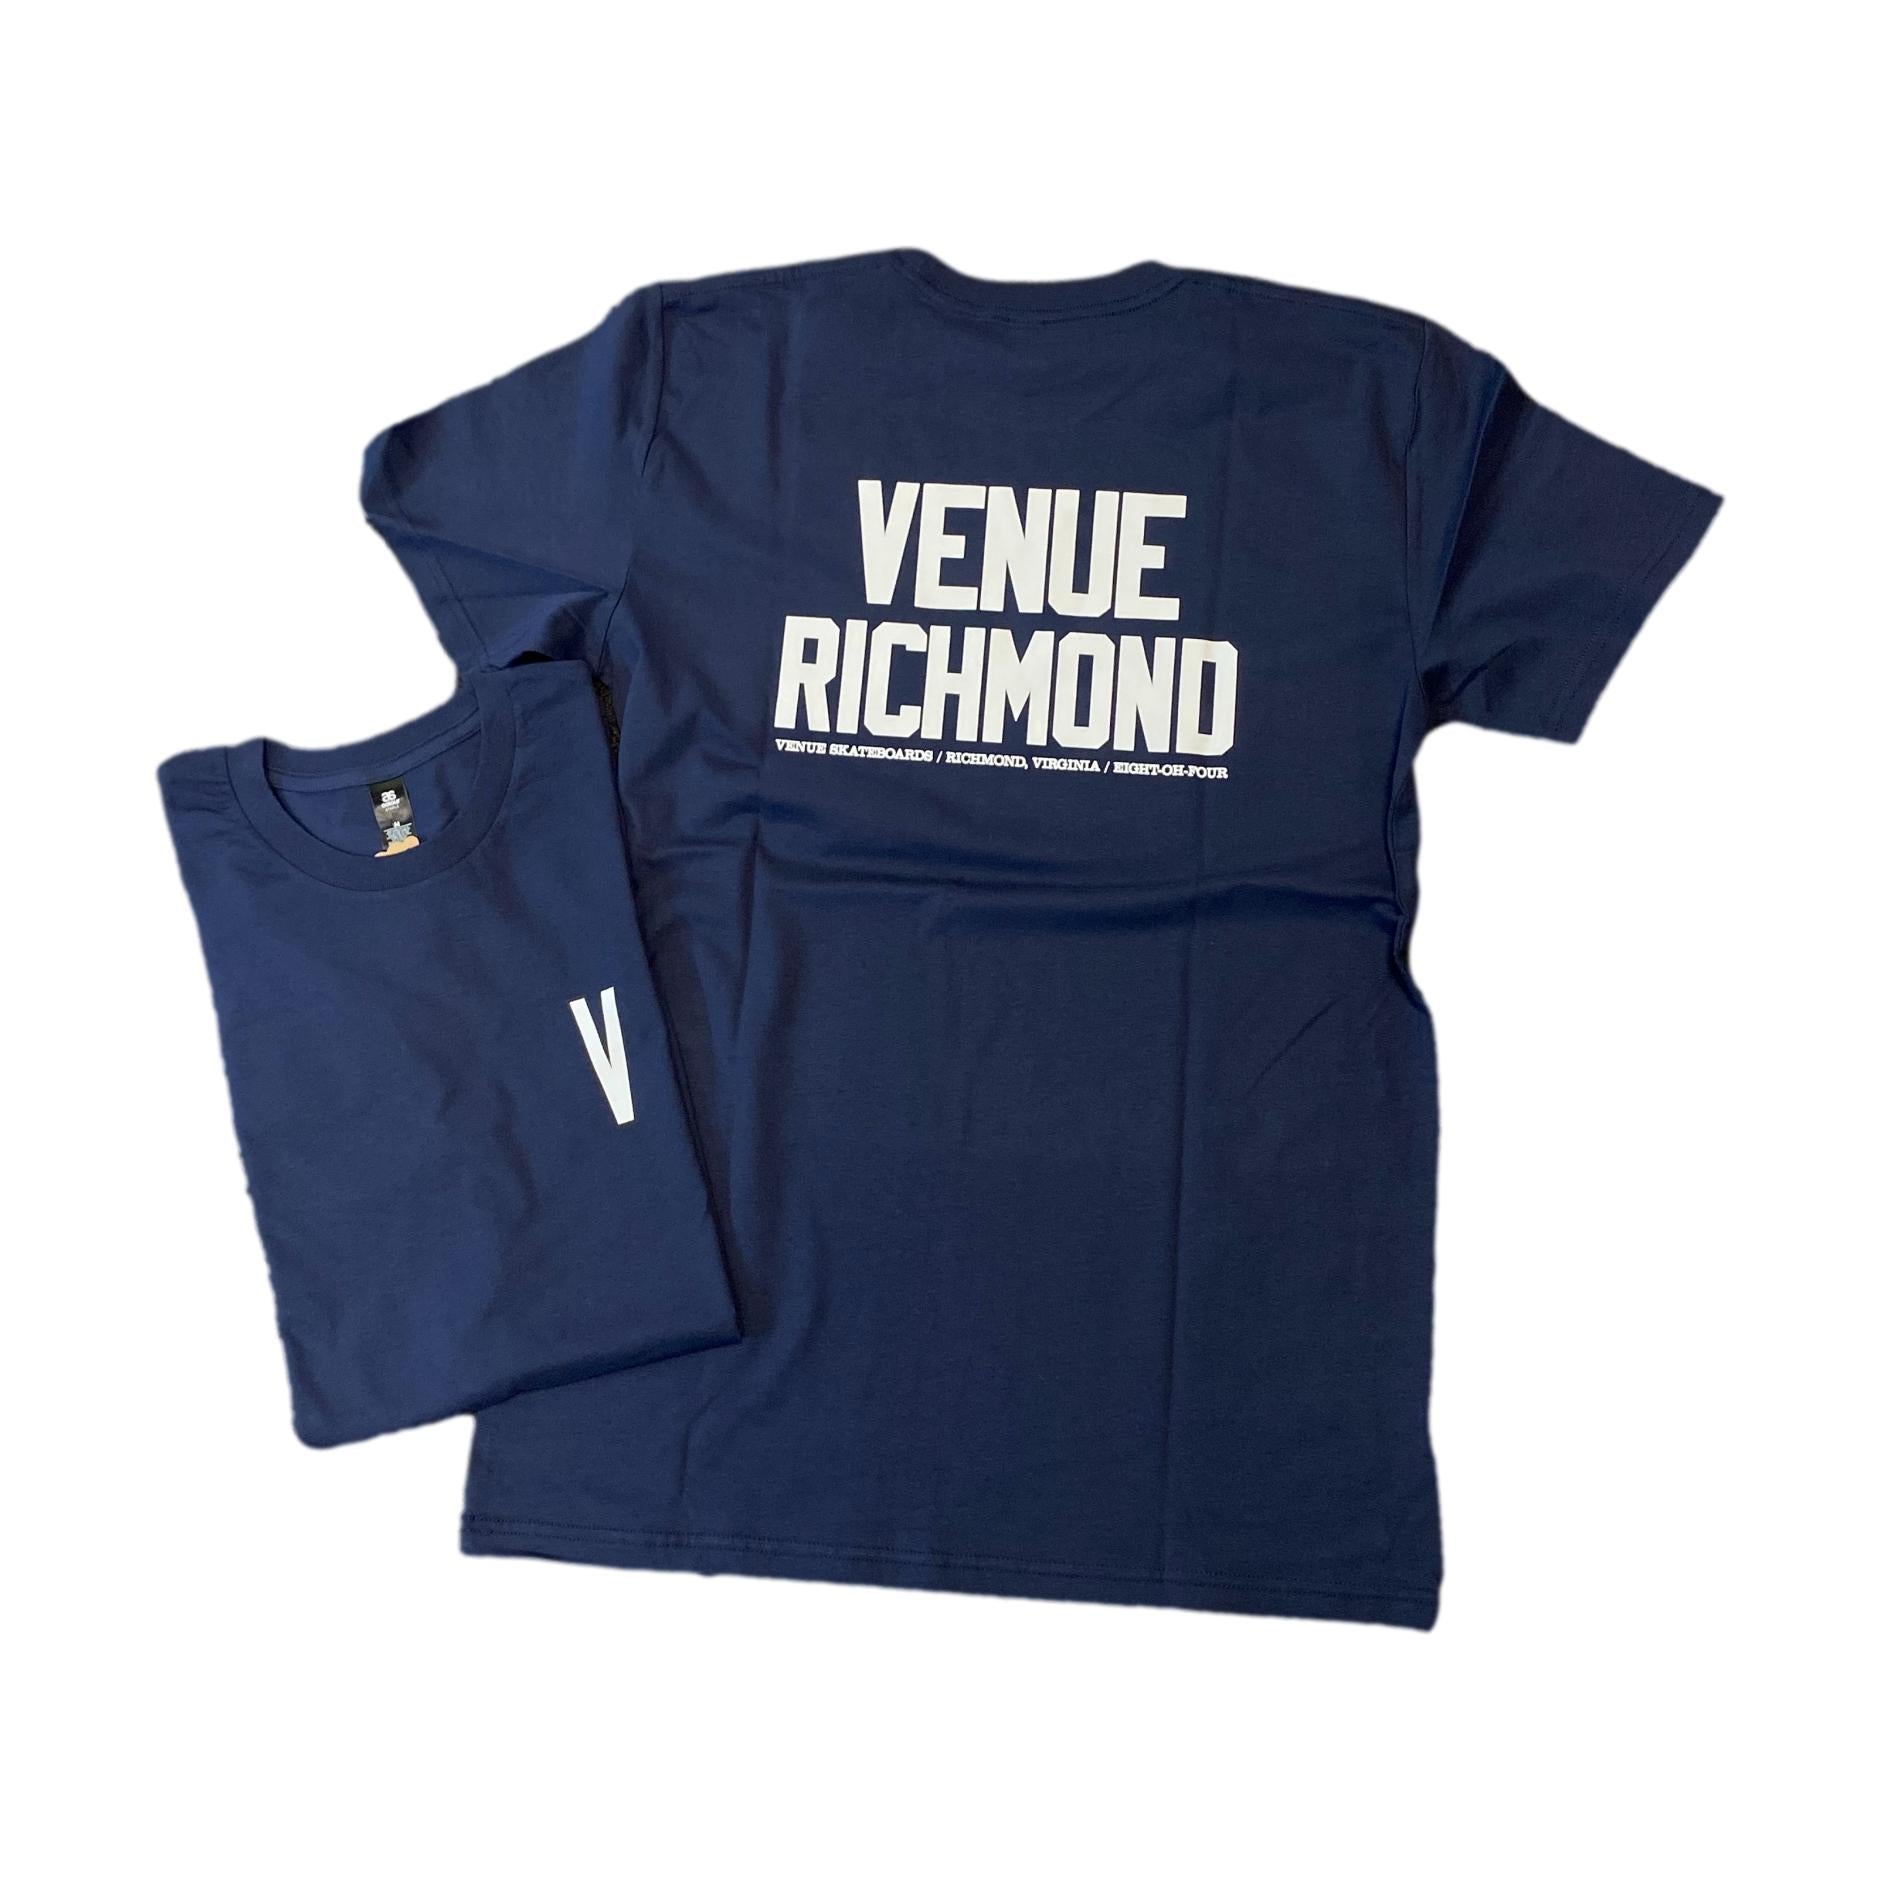 Venue "Venue Richmond" Shortsleeve T-Shirt Navy w/ White - Venue Skateboards